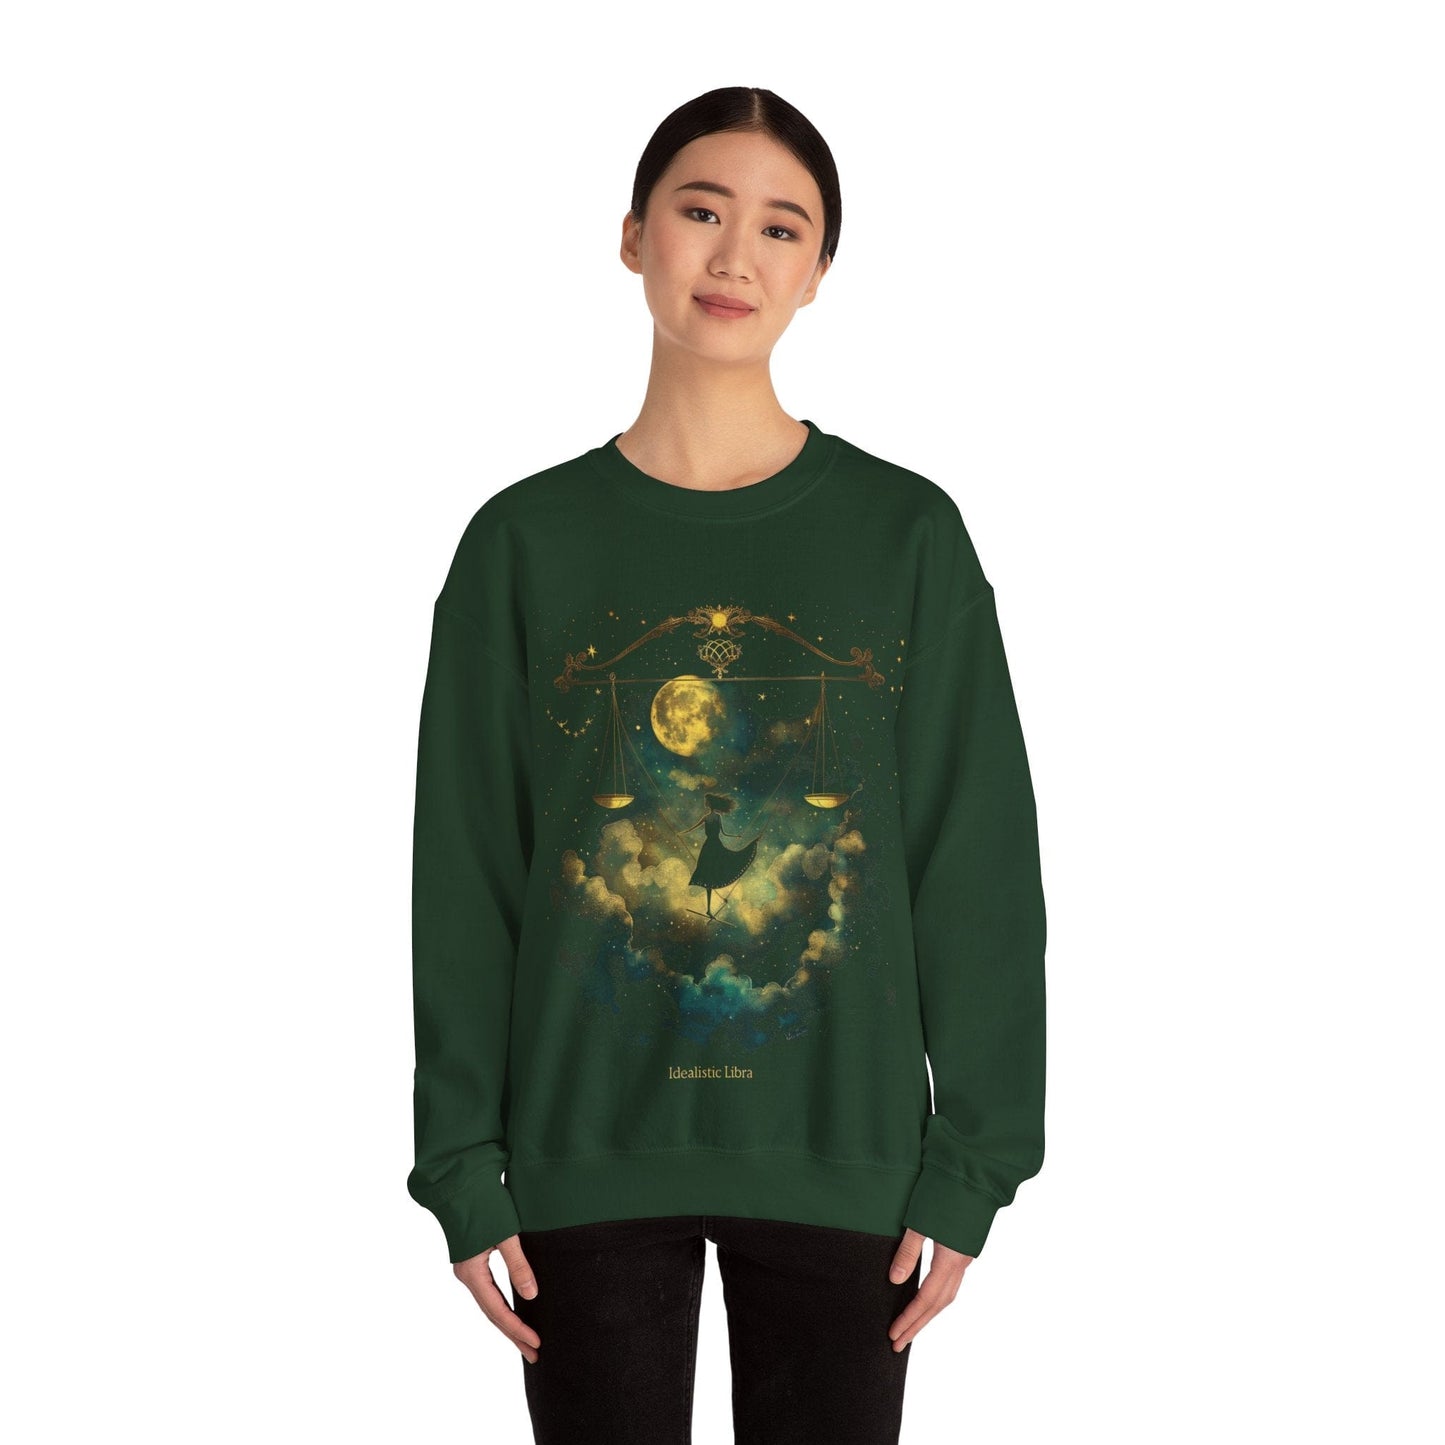 Sweatshirt "Starry Scales" Libra Idealistic Sweater: Celestial Elegance